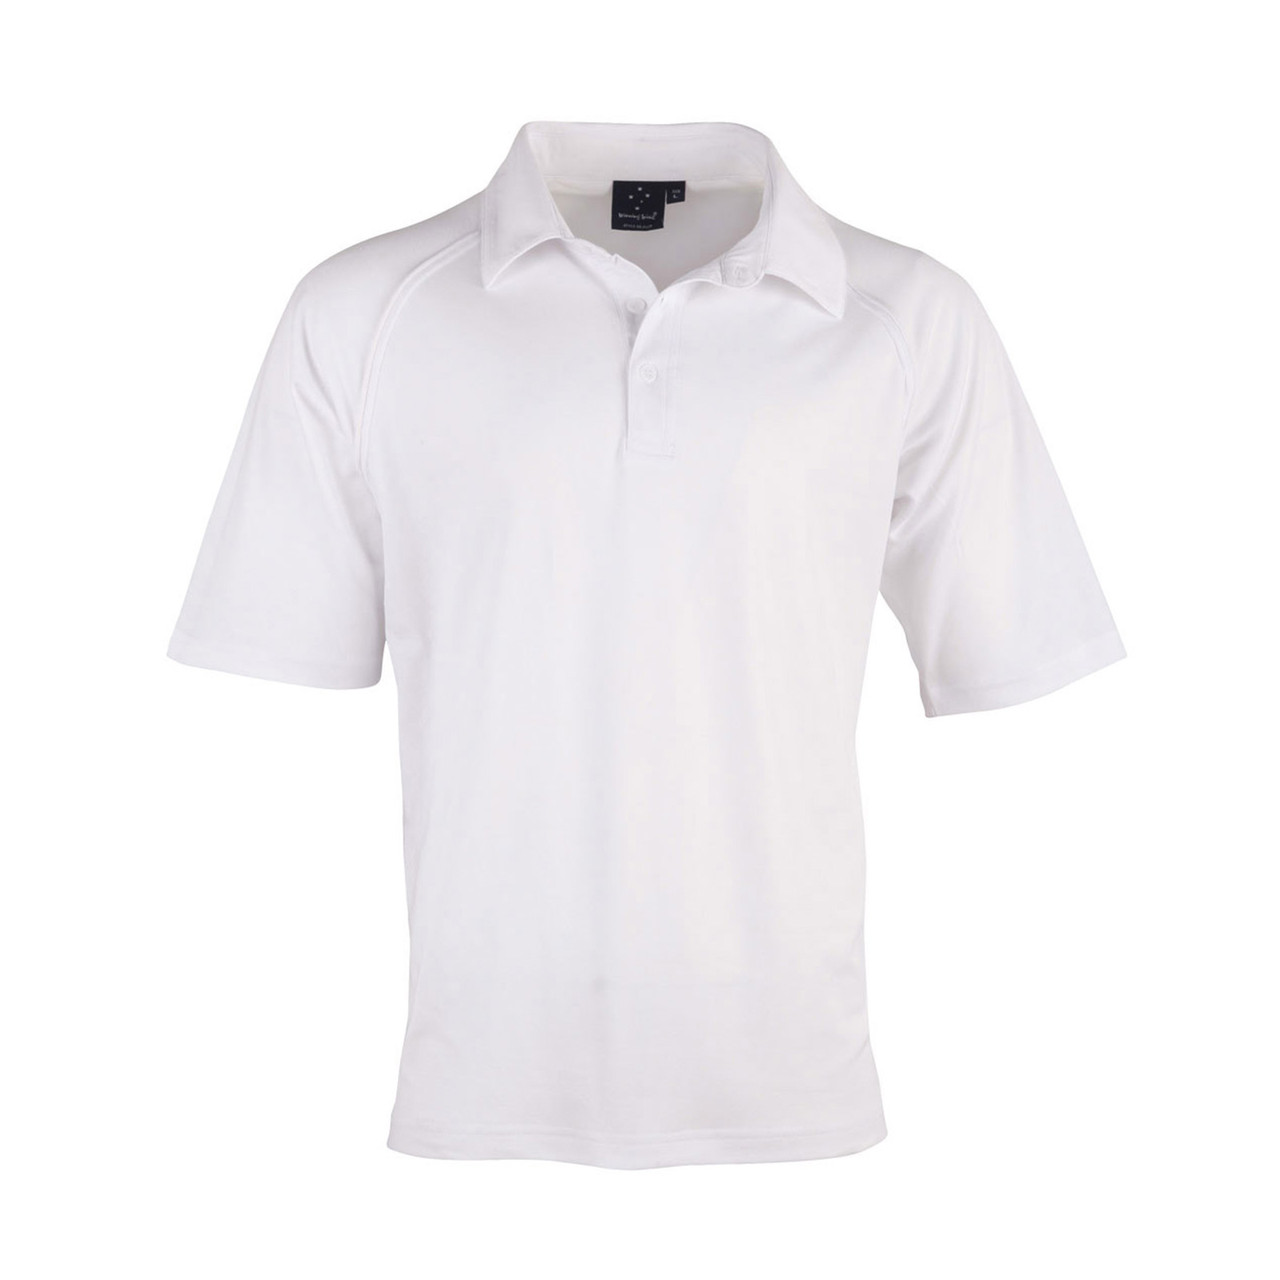 Shop Plain Cricket Polo Shirts | TrueDry Mesh Knit Short Sleeve Uniform